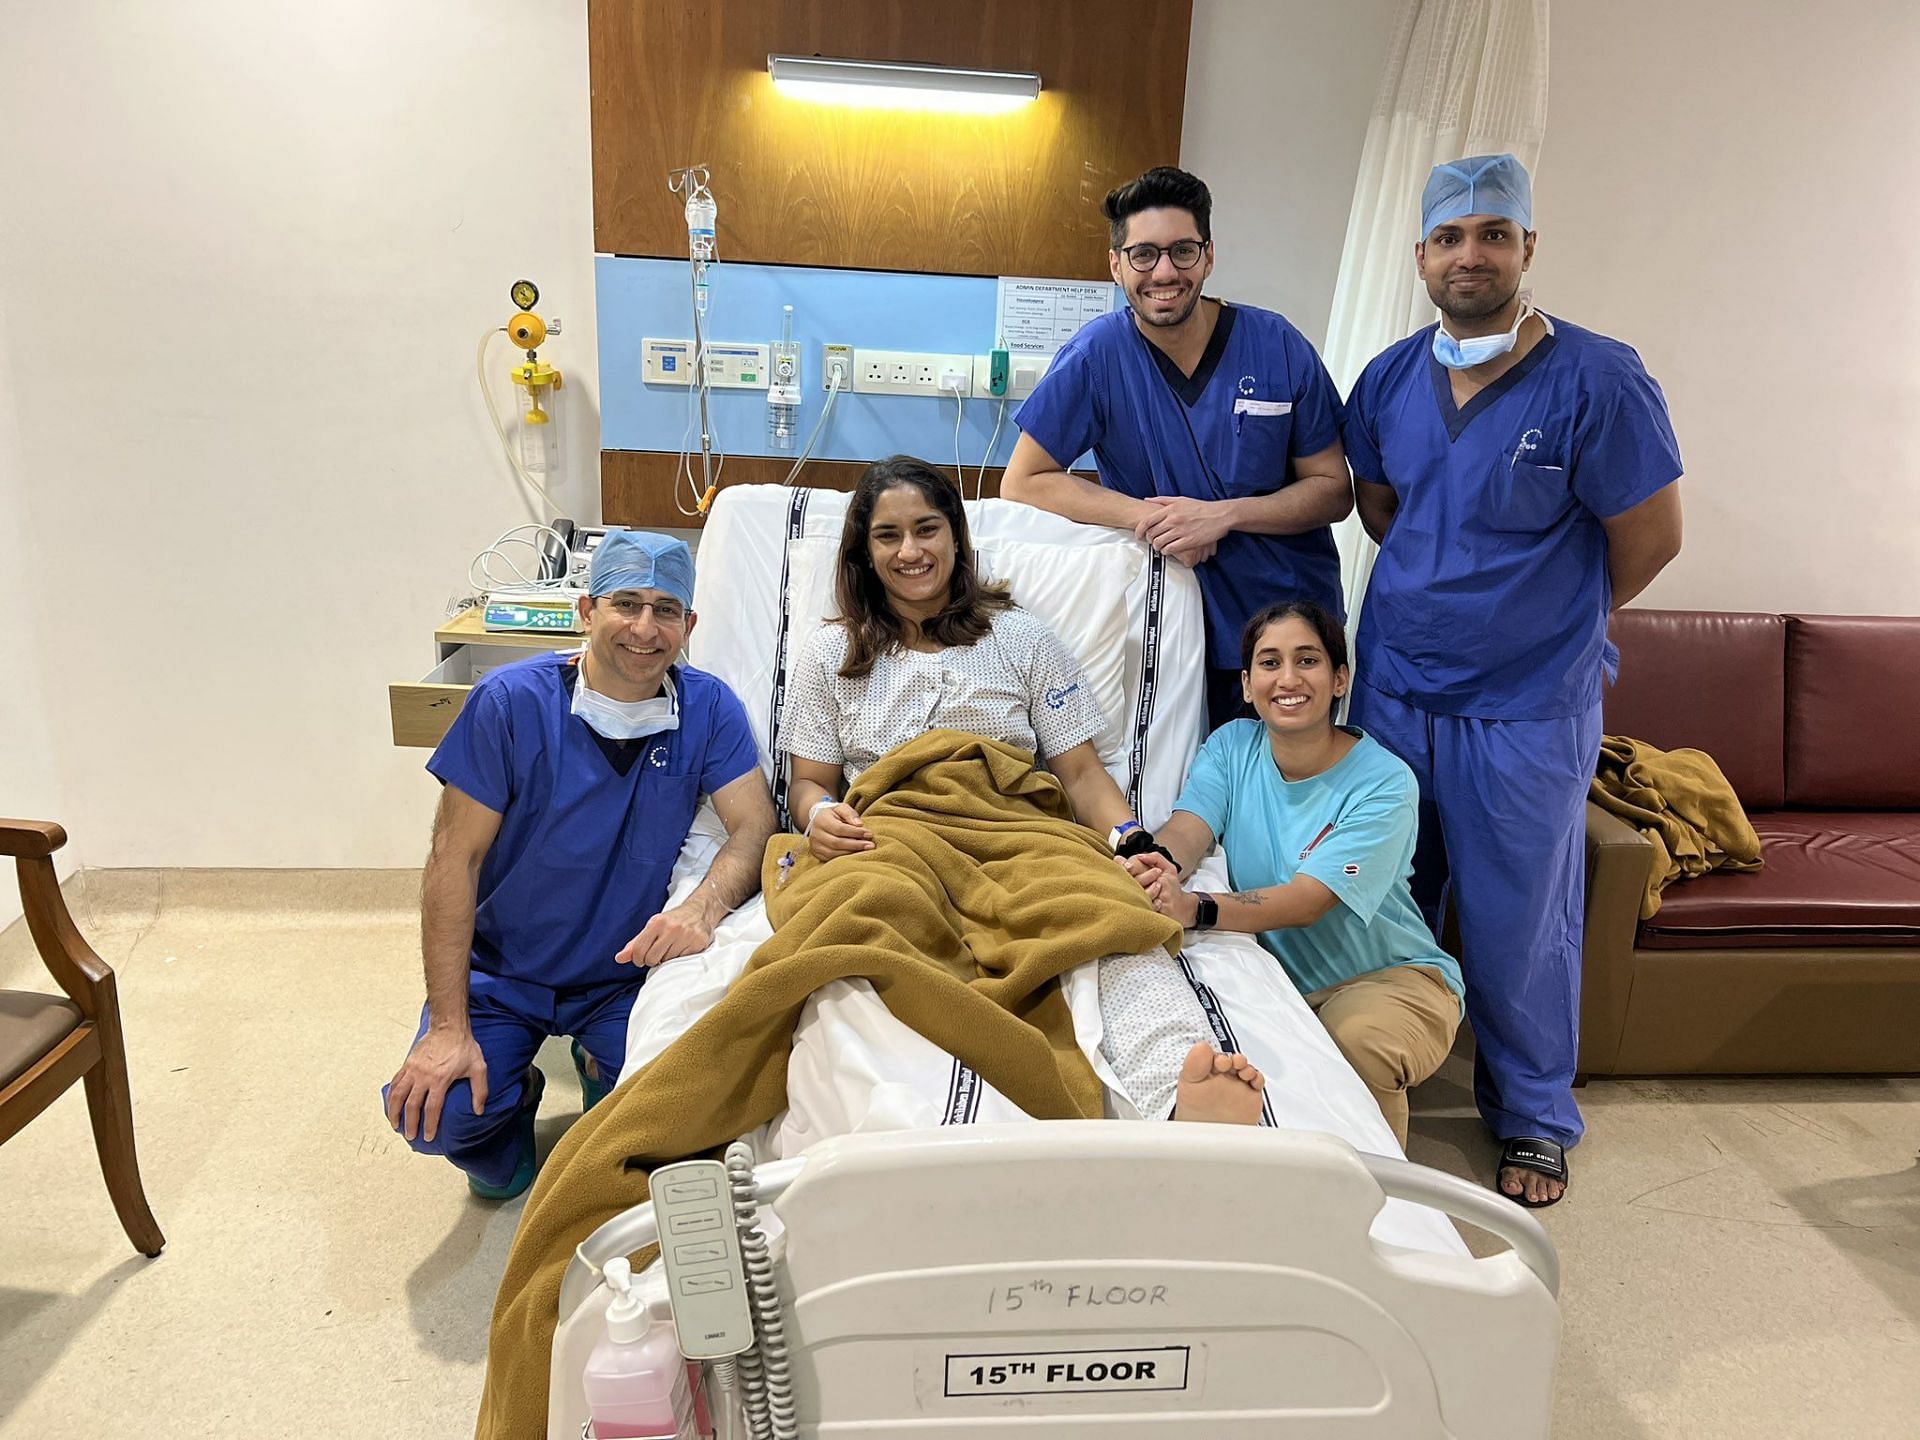 Vinesh Phogat undergoes knee surgery in Mumbai, promises strong comeback (Image via Vinesh